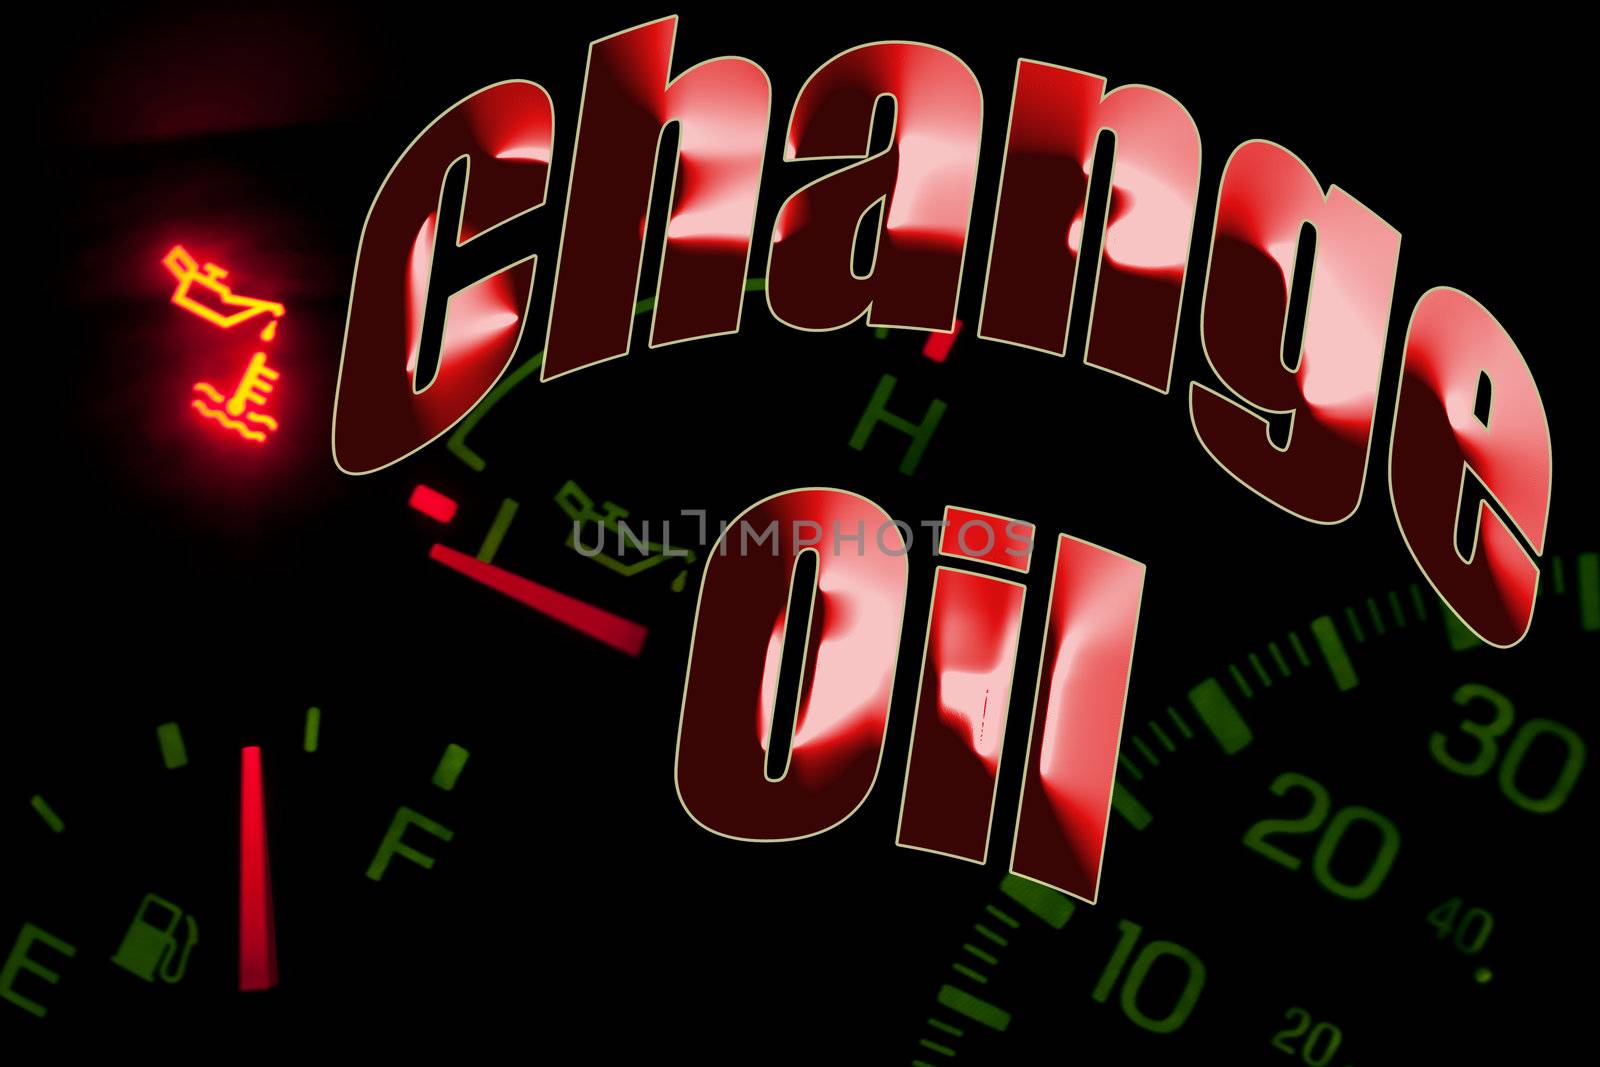 Change oil service engine light by GunterNezhoda